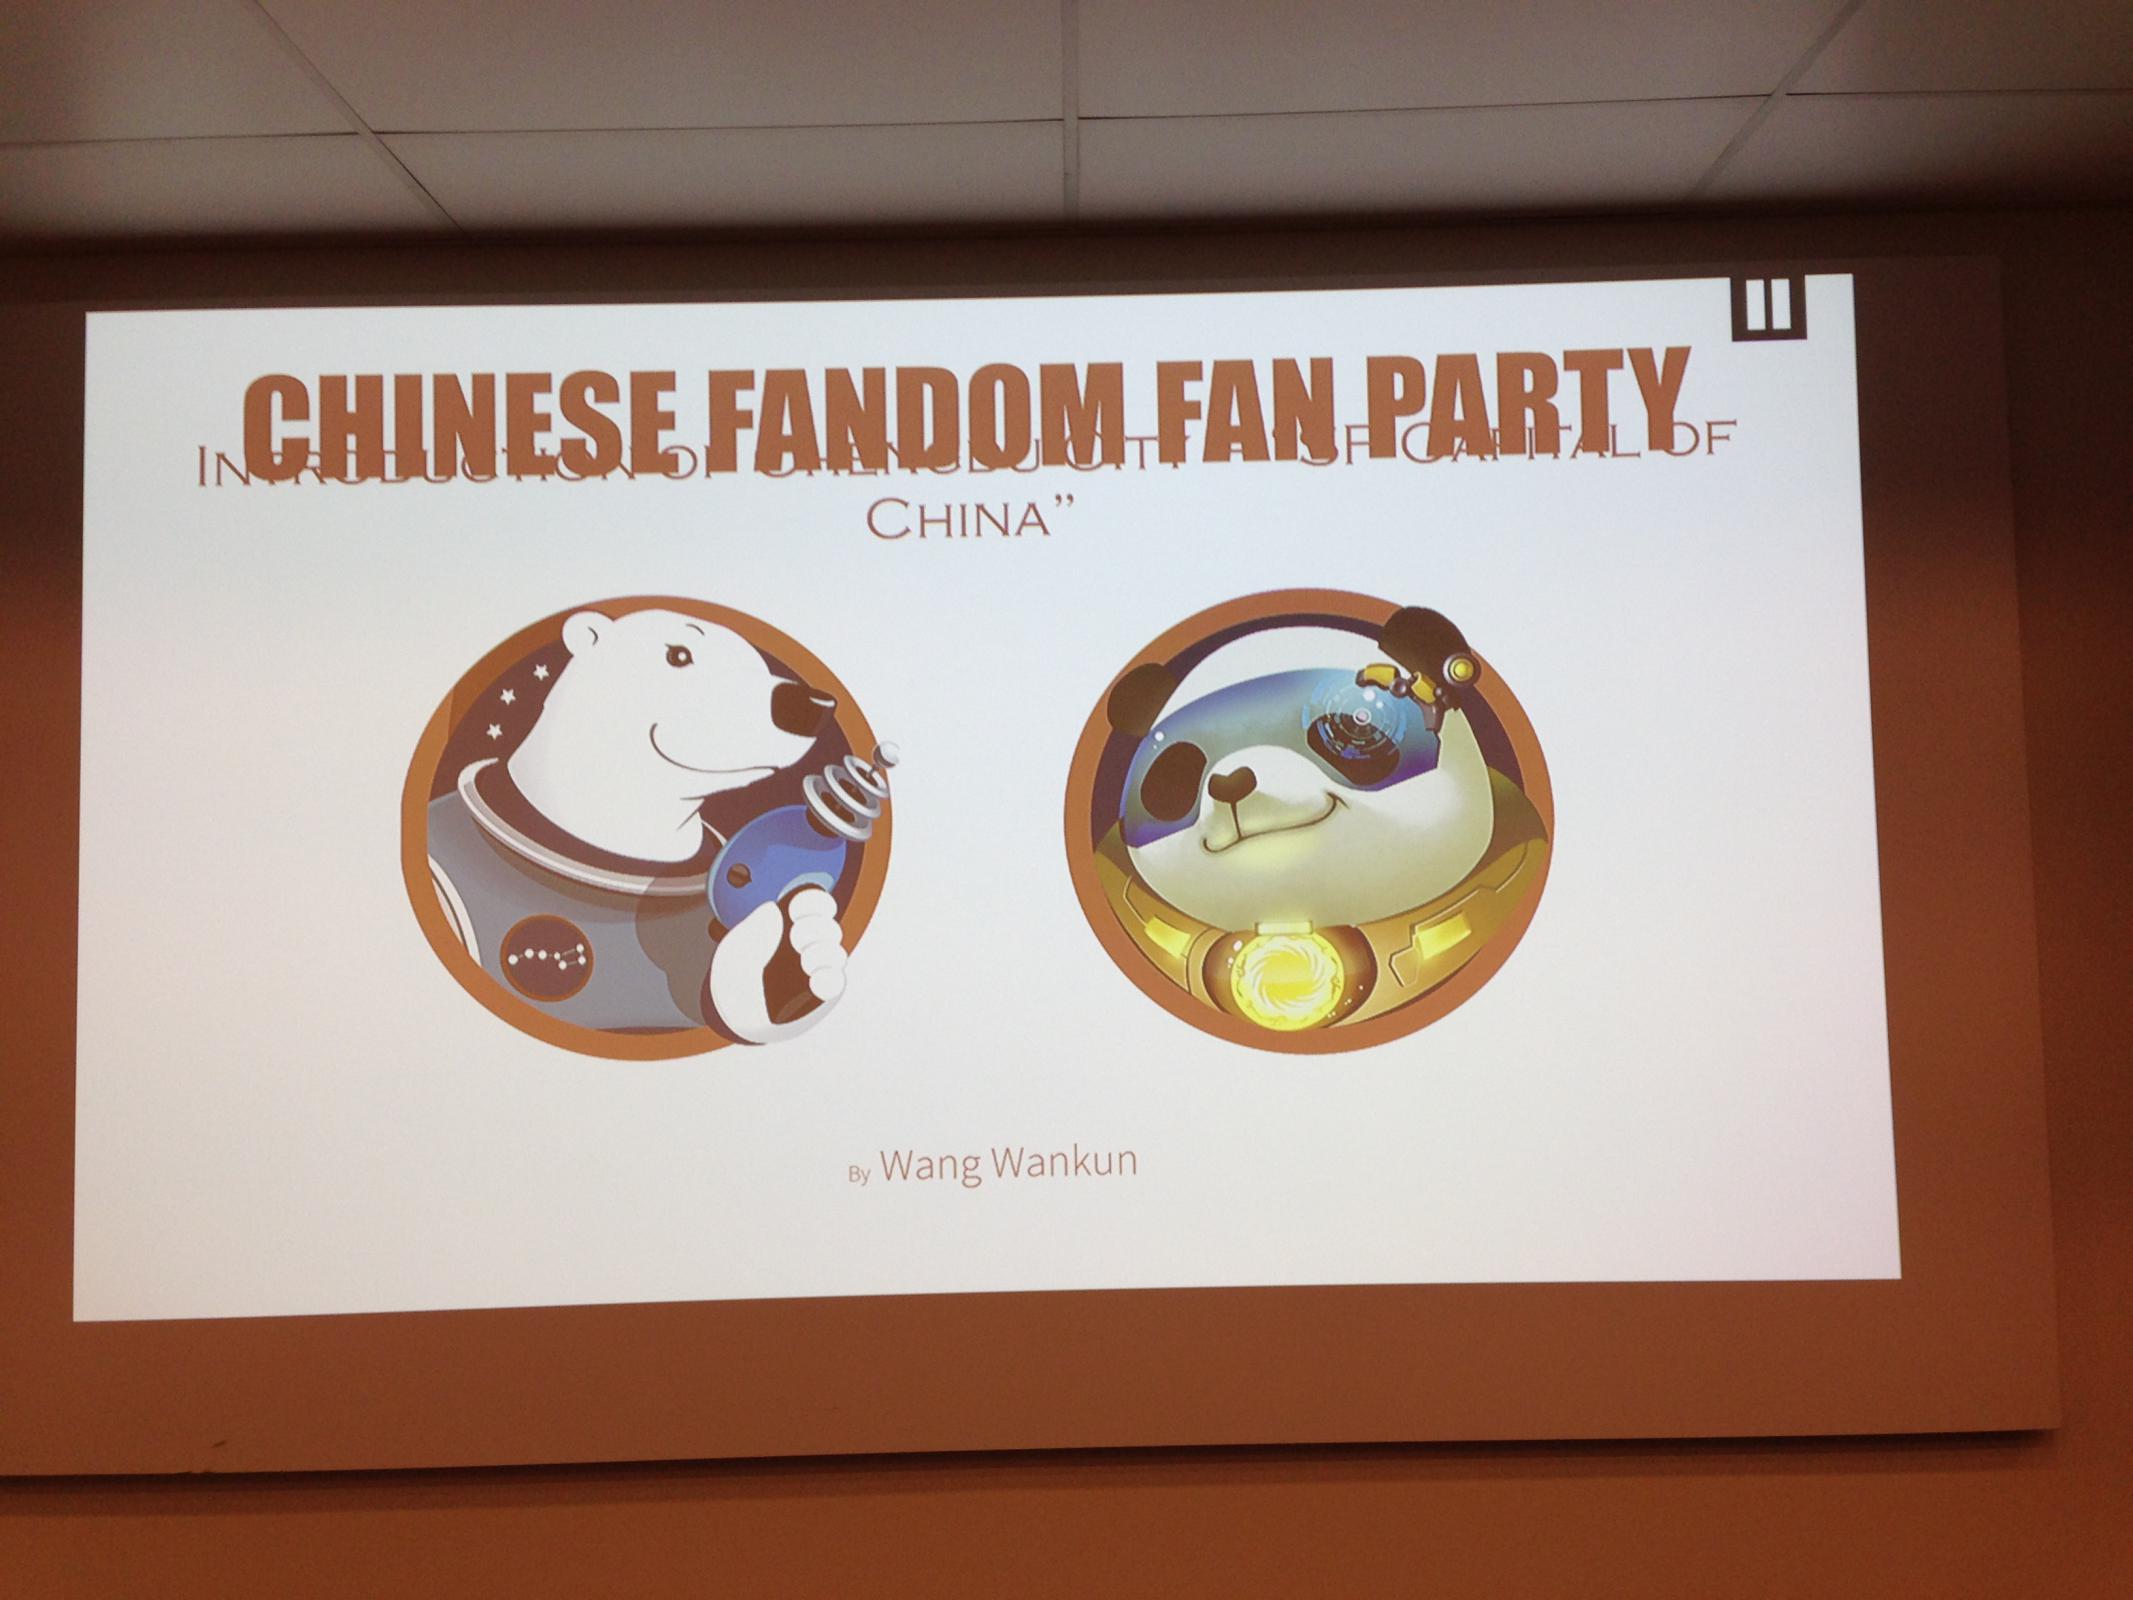 WorldCon 75 Helsinki - Chinese Fandom Party